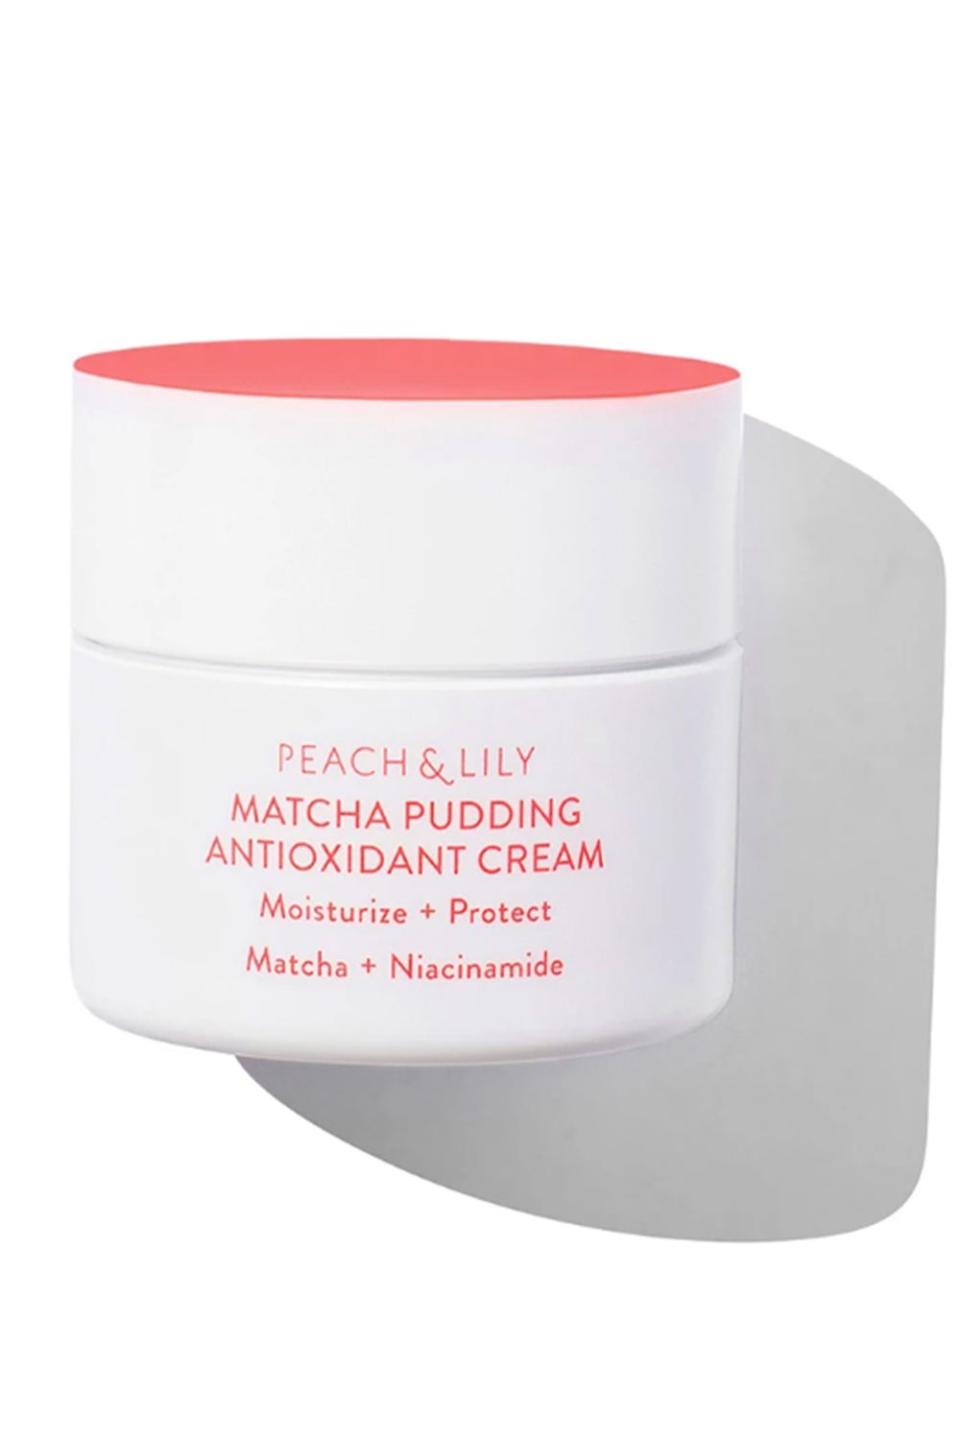 5) Peach & Lily Matcha Pudding Antioxidant Cream